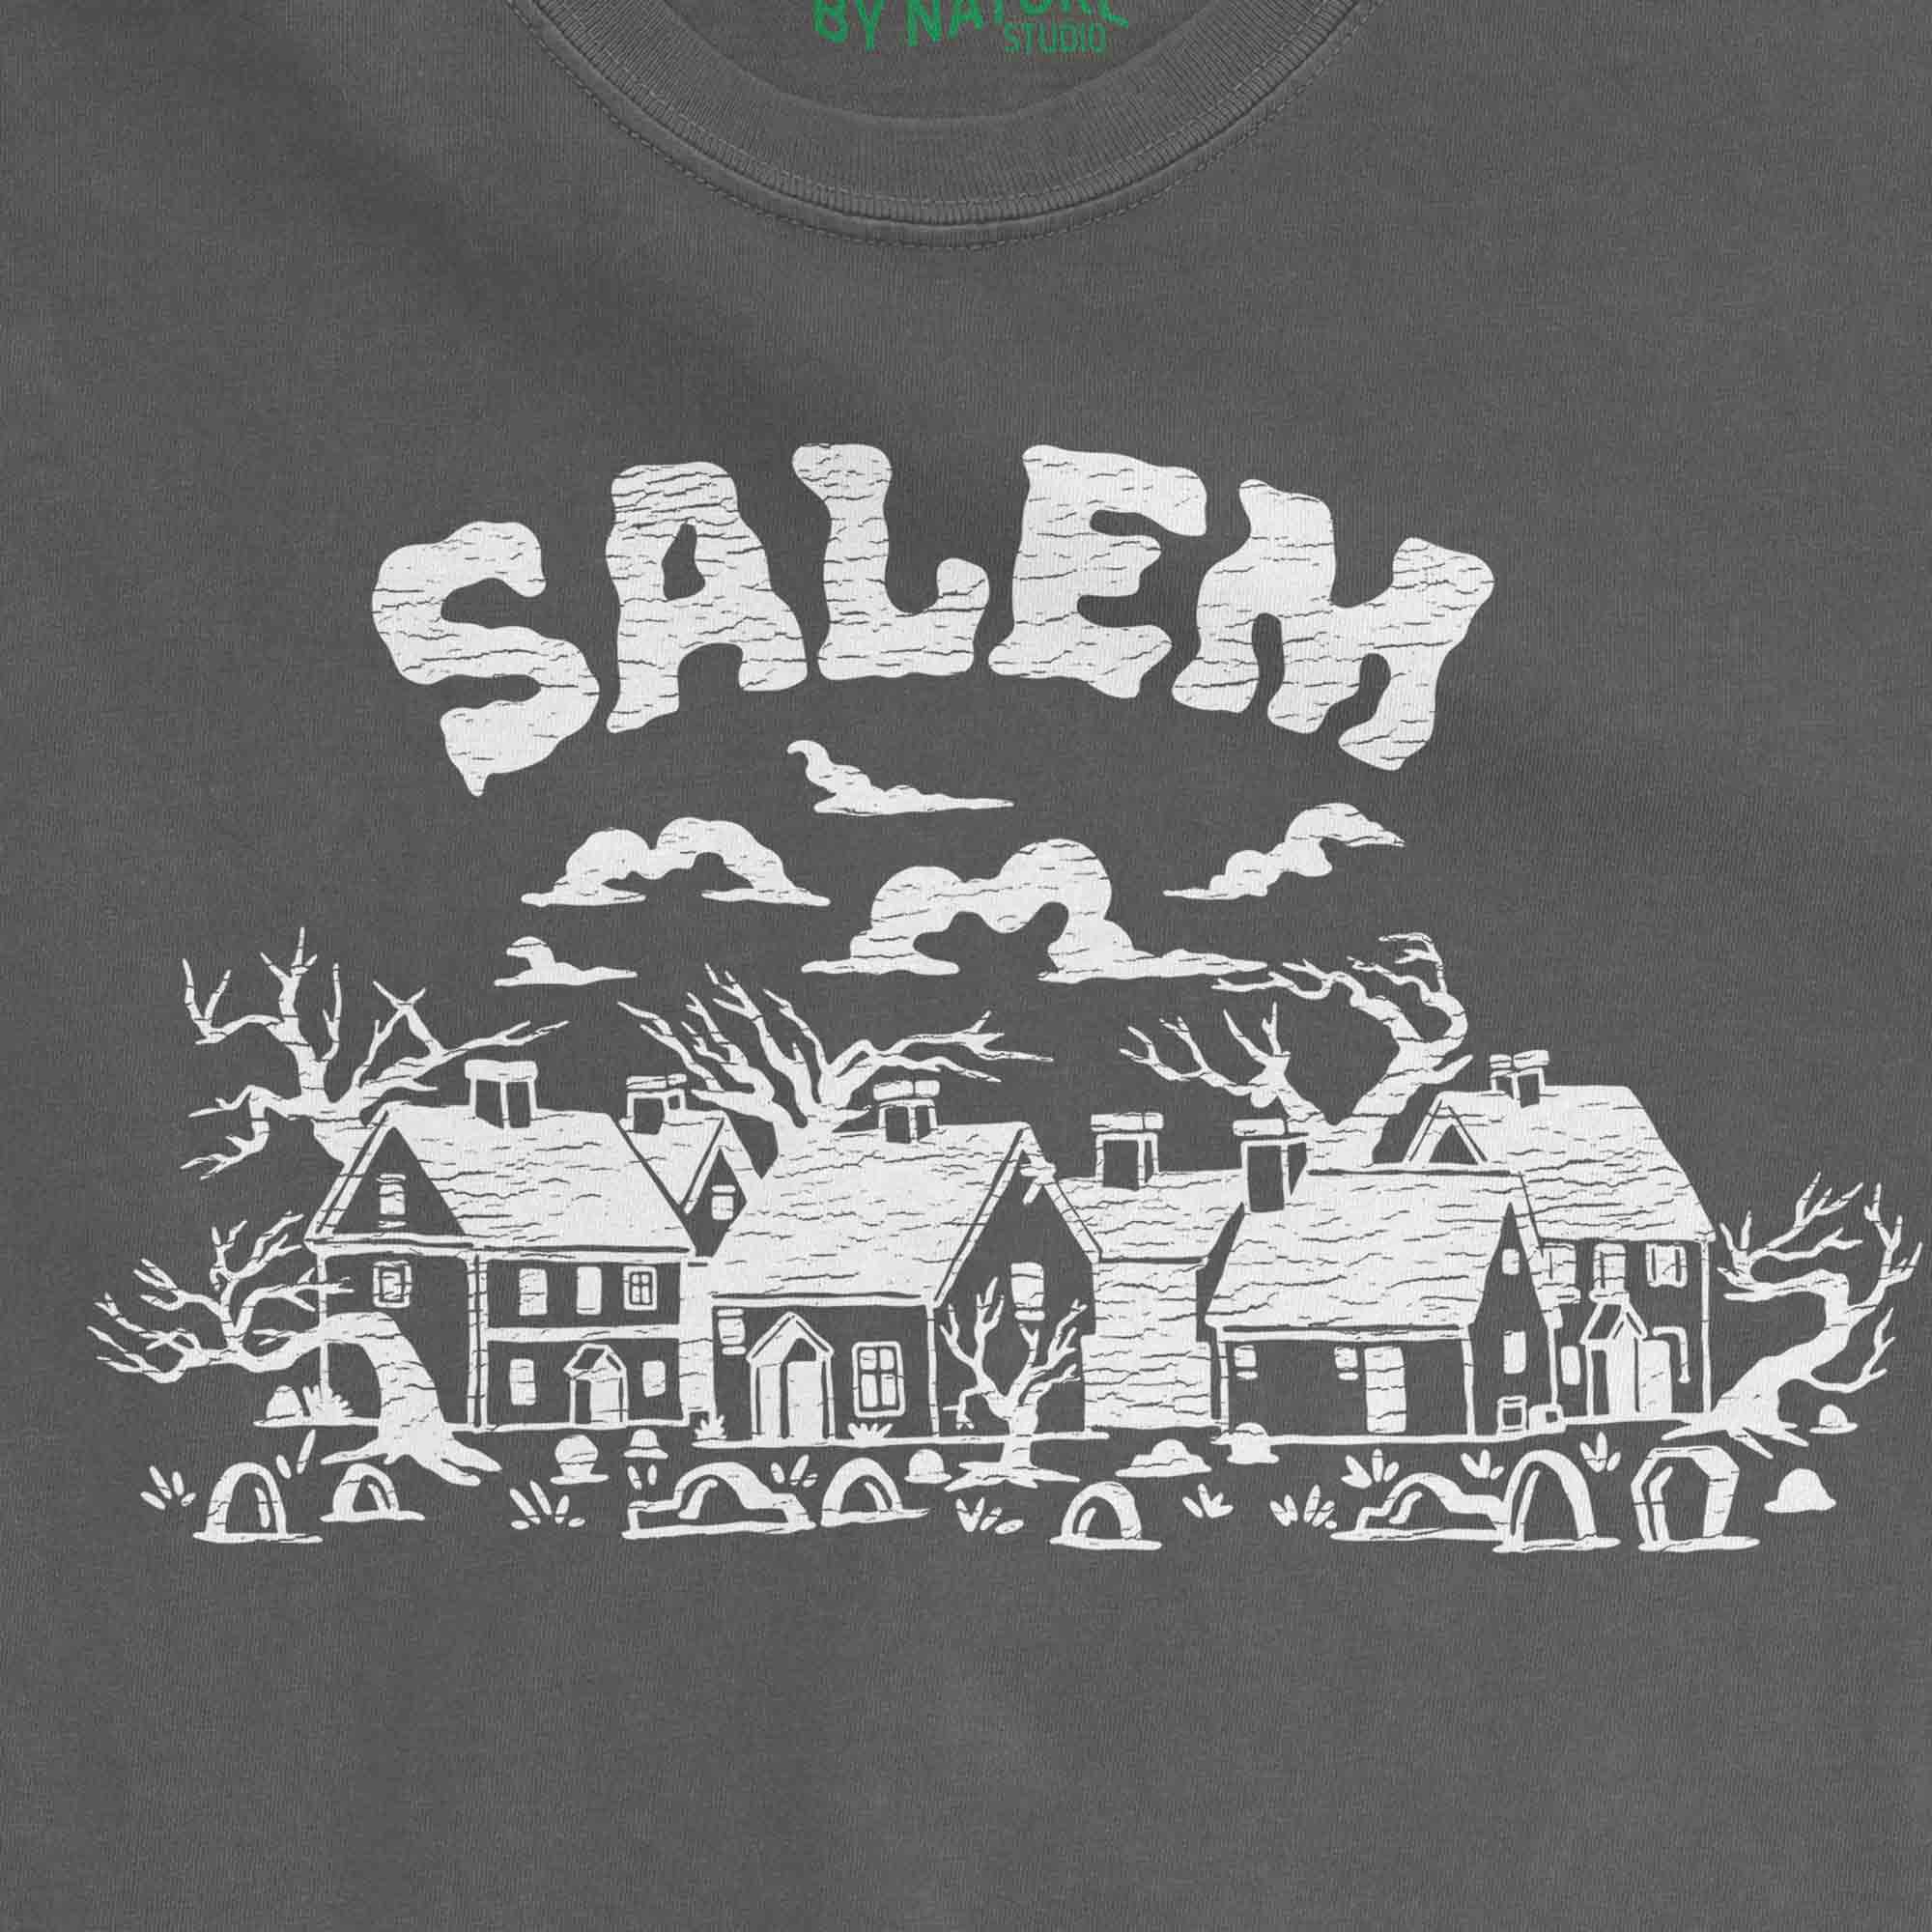 Salem Graphic T-Shirt